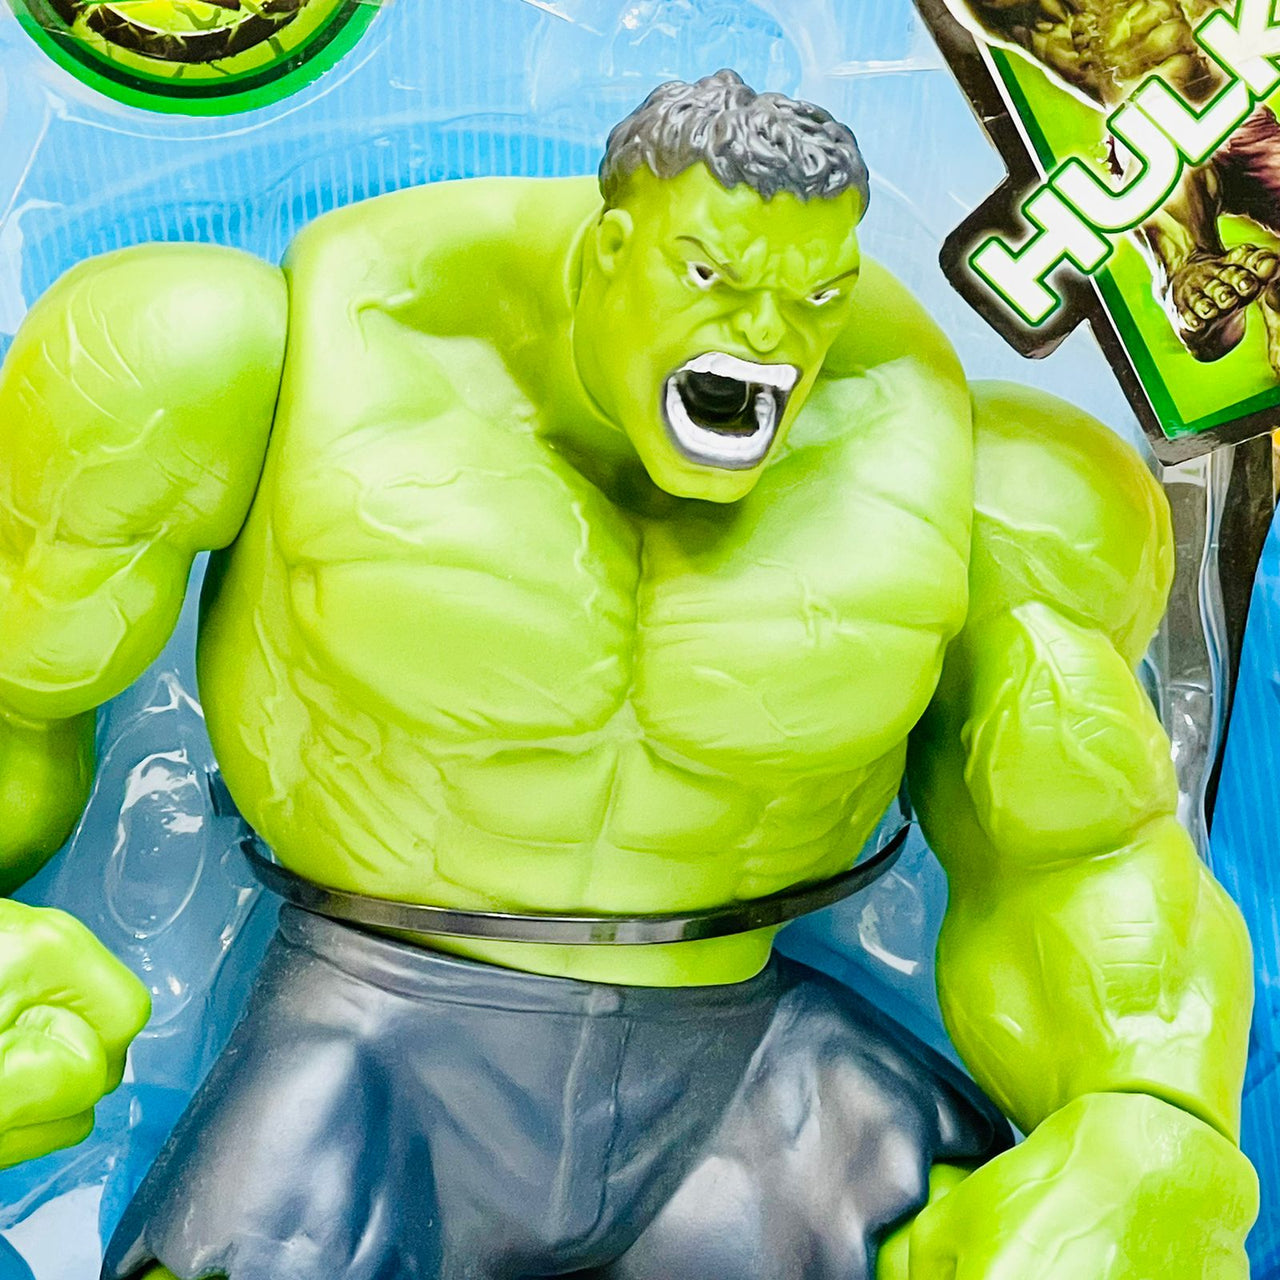 Premium Quality Marvel Avengers Action Figure Hulk